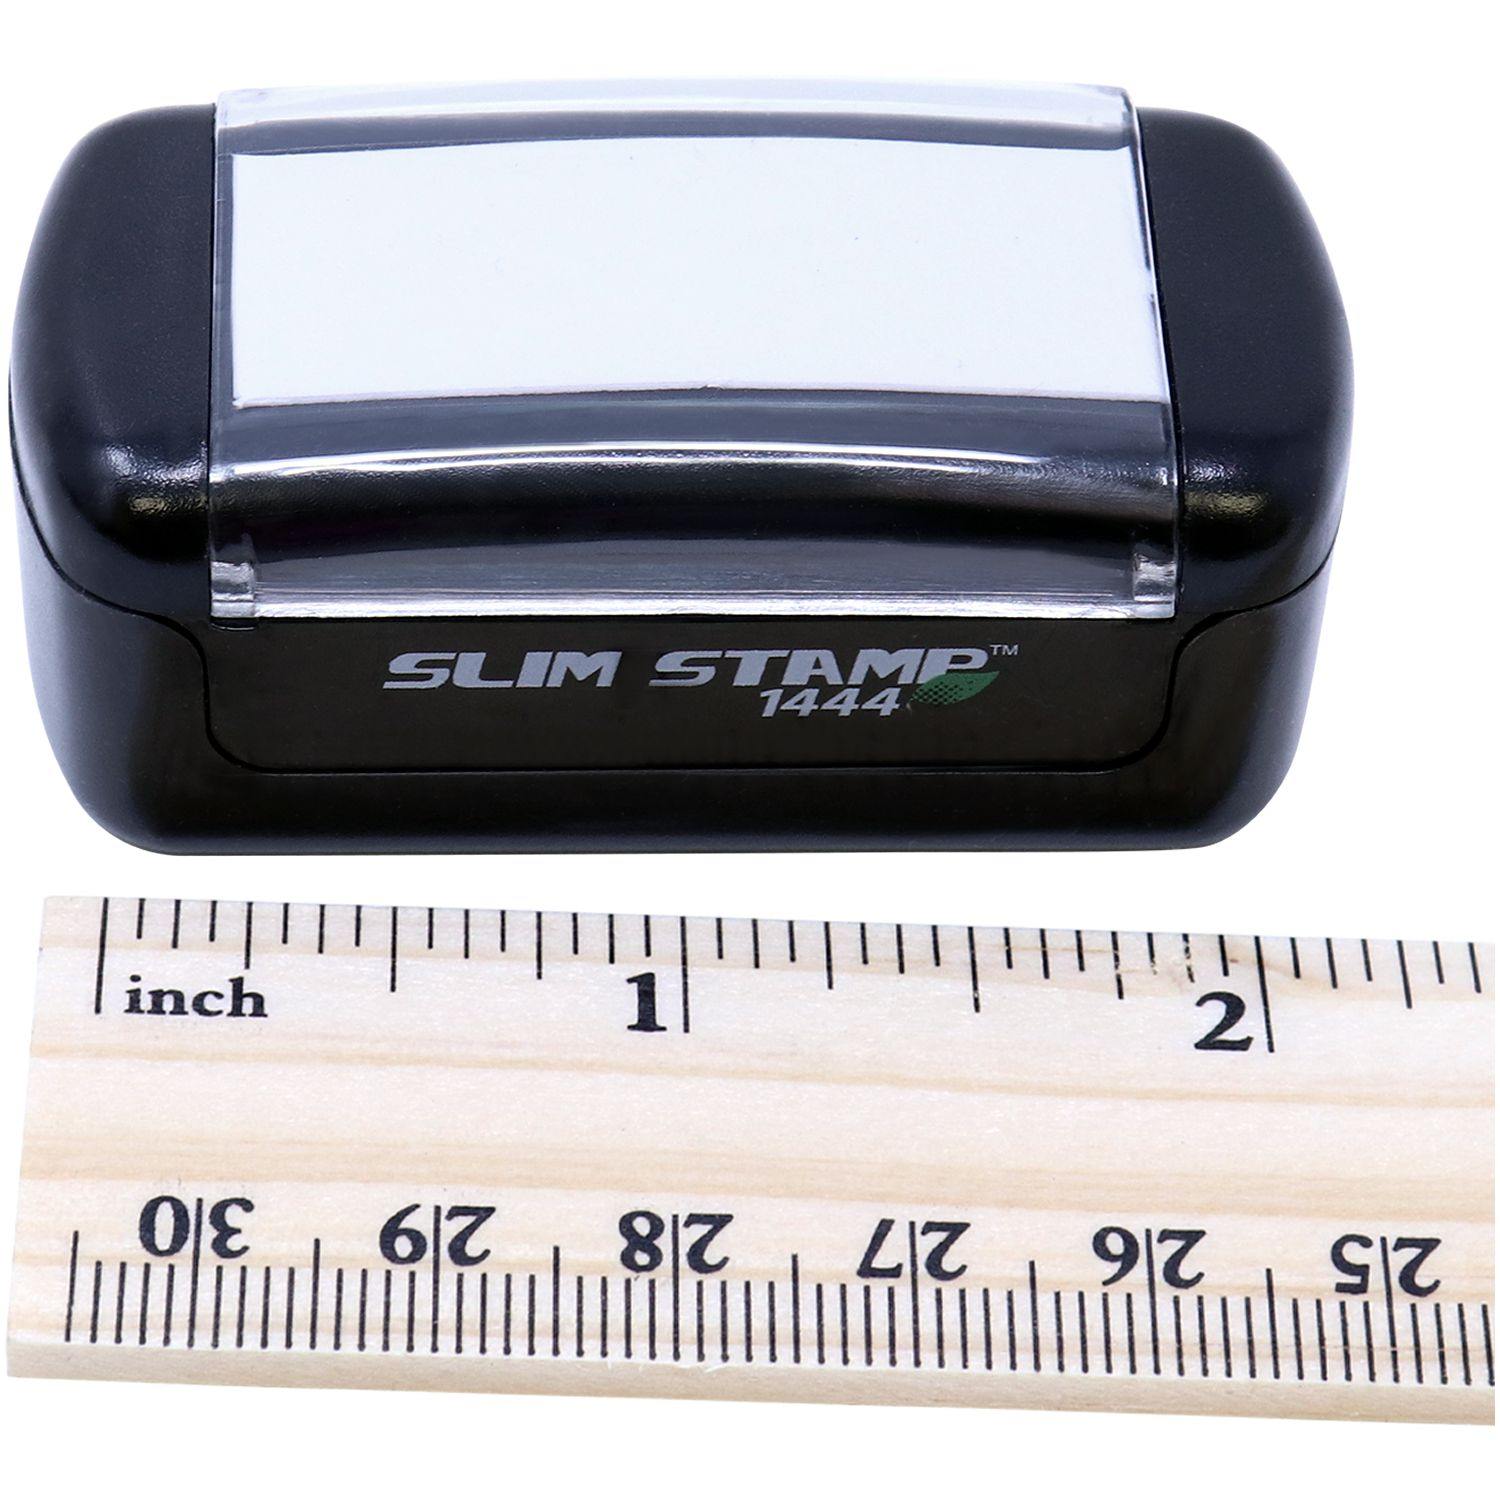 Measurement Slim Pre Inked Exhibit Stamp with Ruler